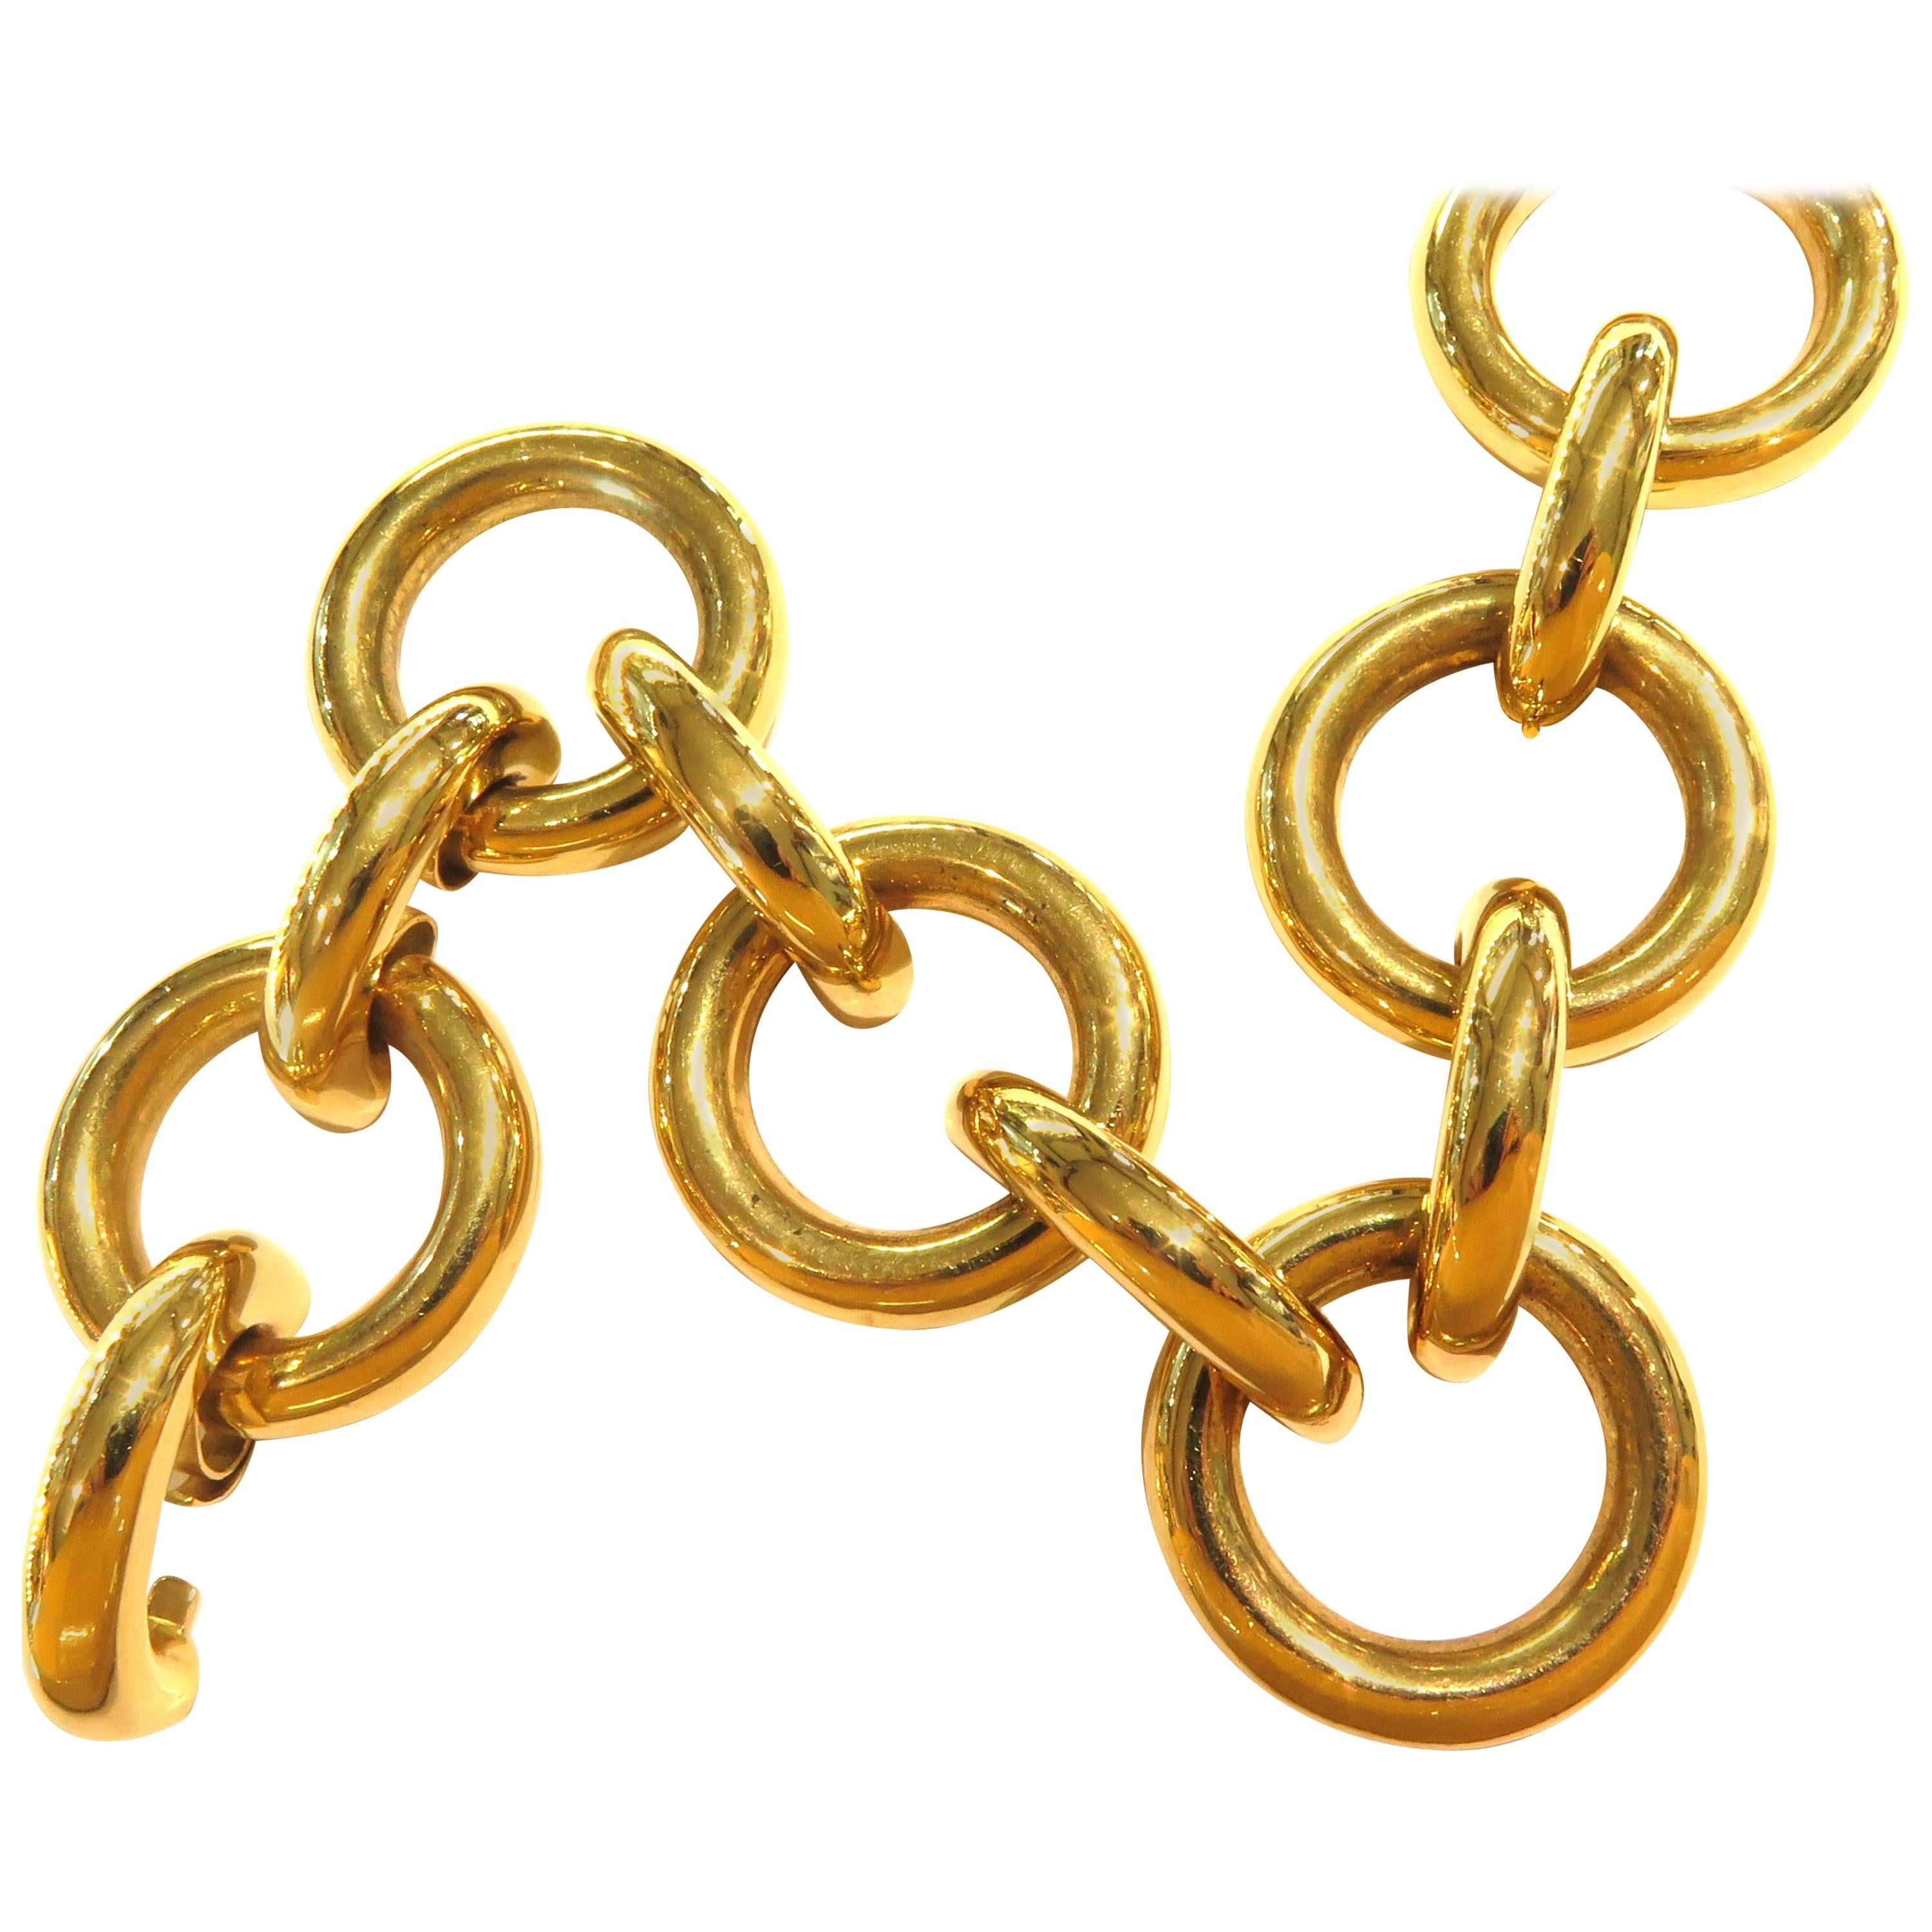 Circular Oversized Gold Links Bracelet